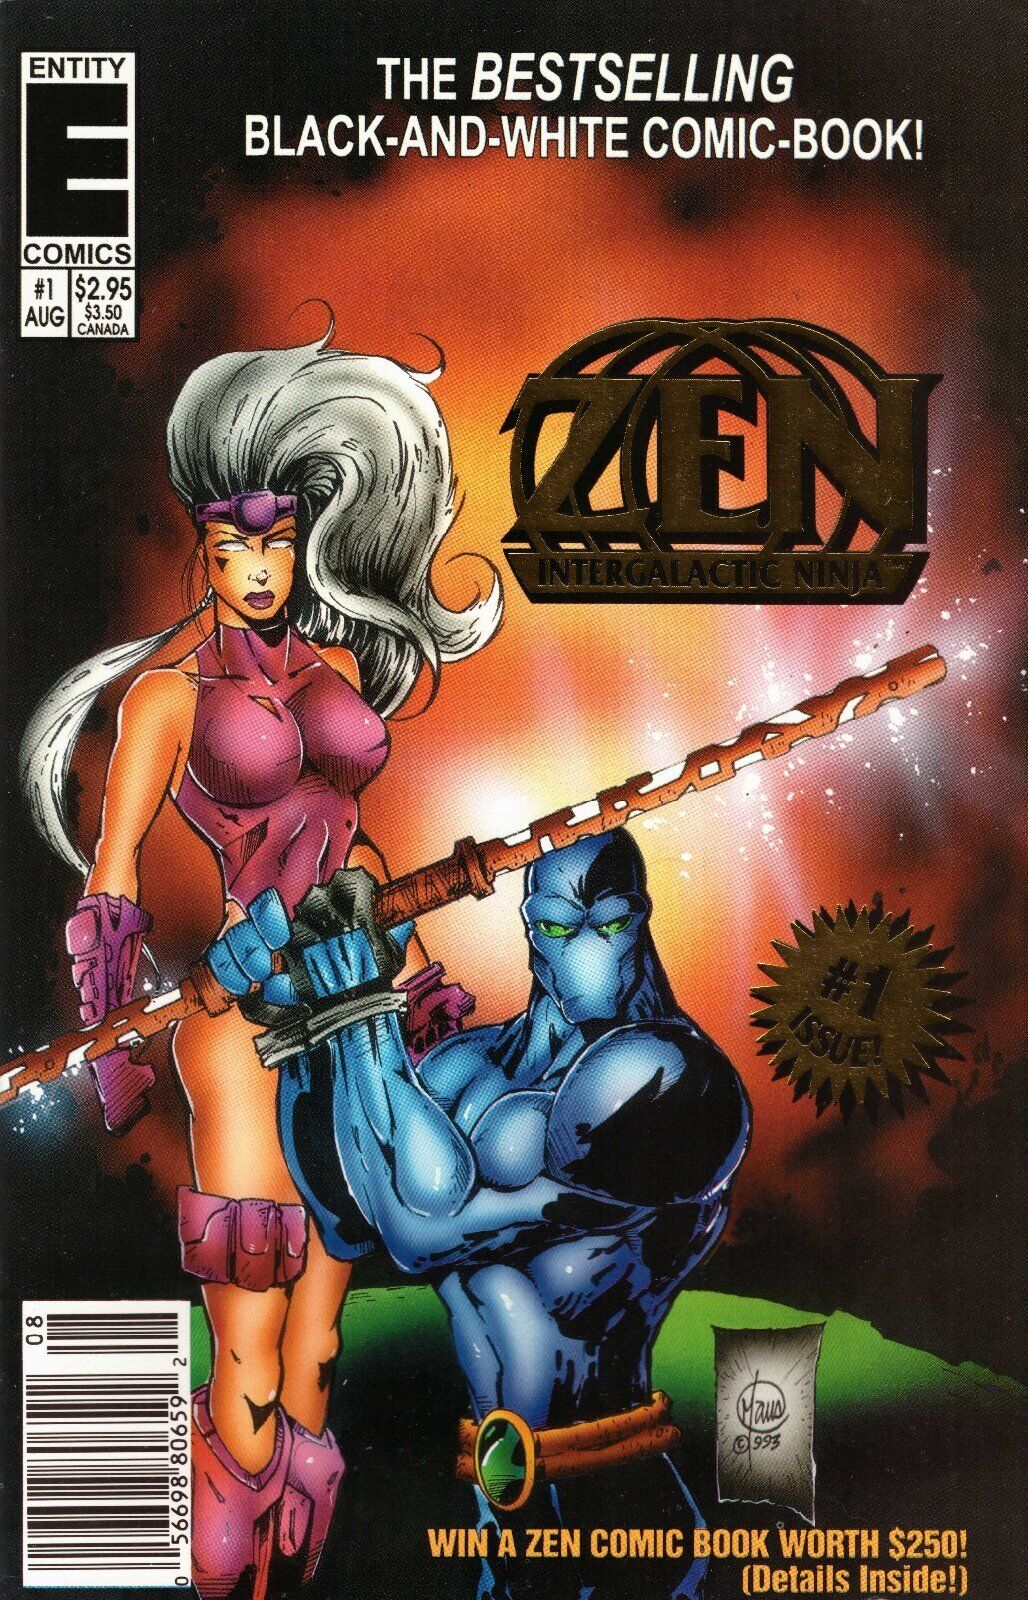 Zen Intergalactic Ninja #1 Newsstand Cover (1993) Entity Comics